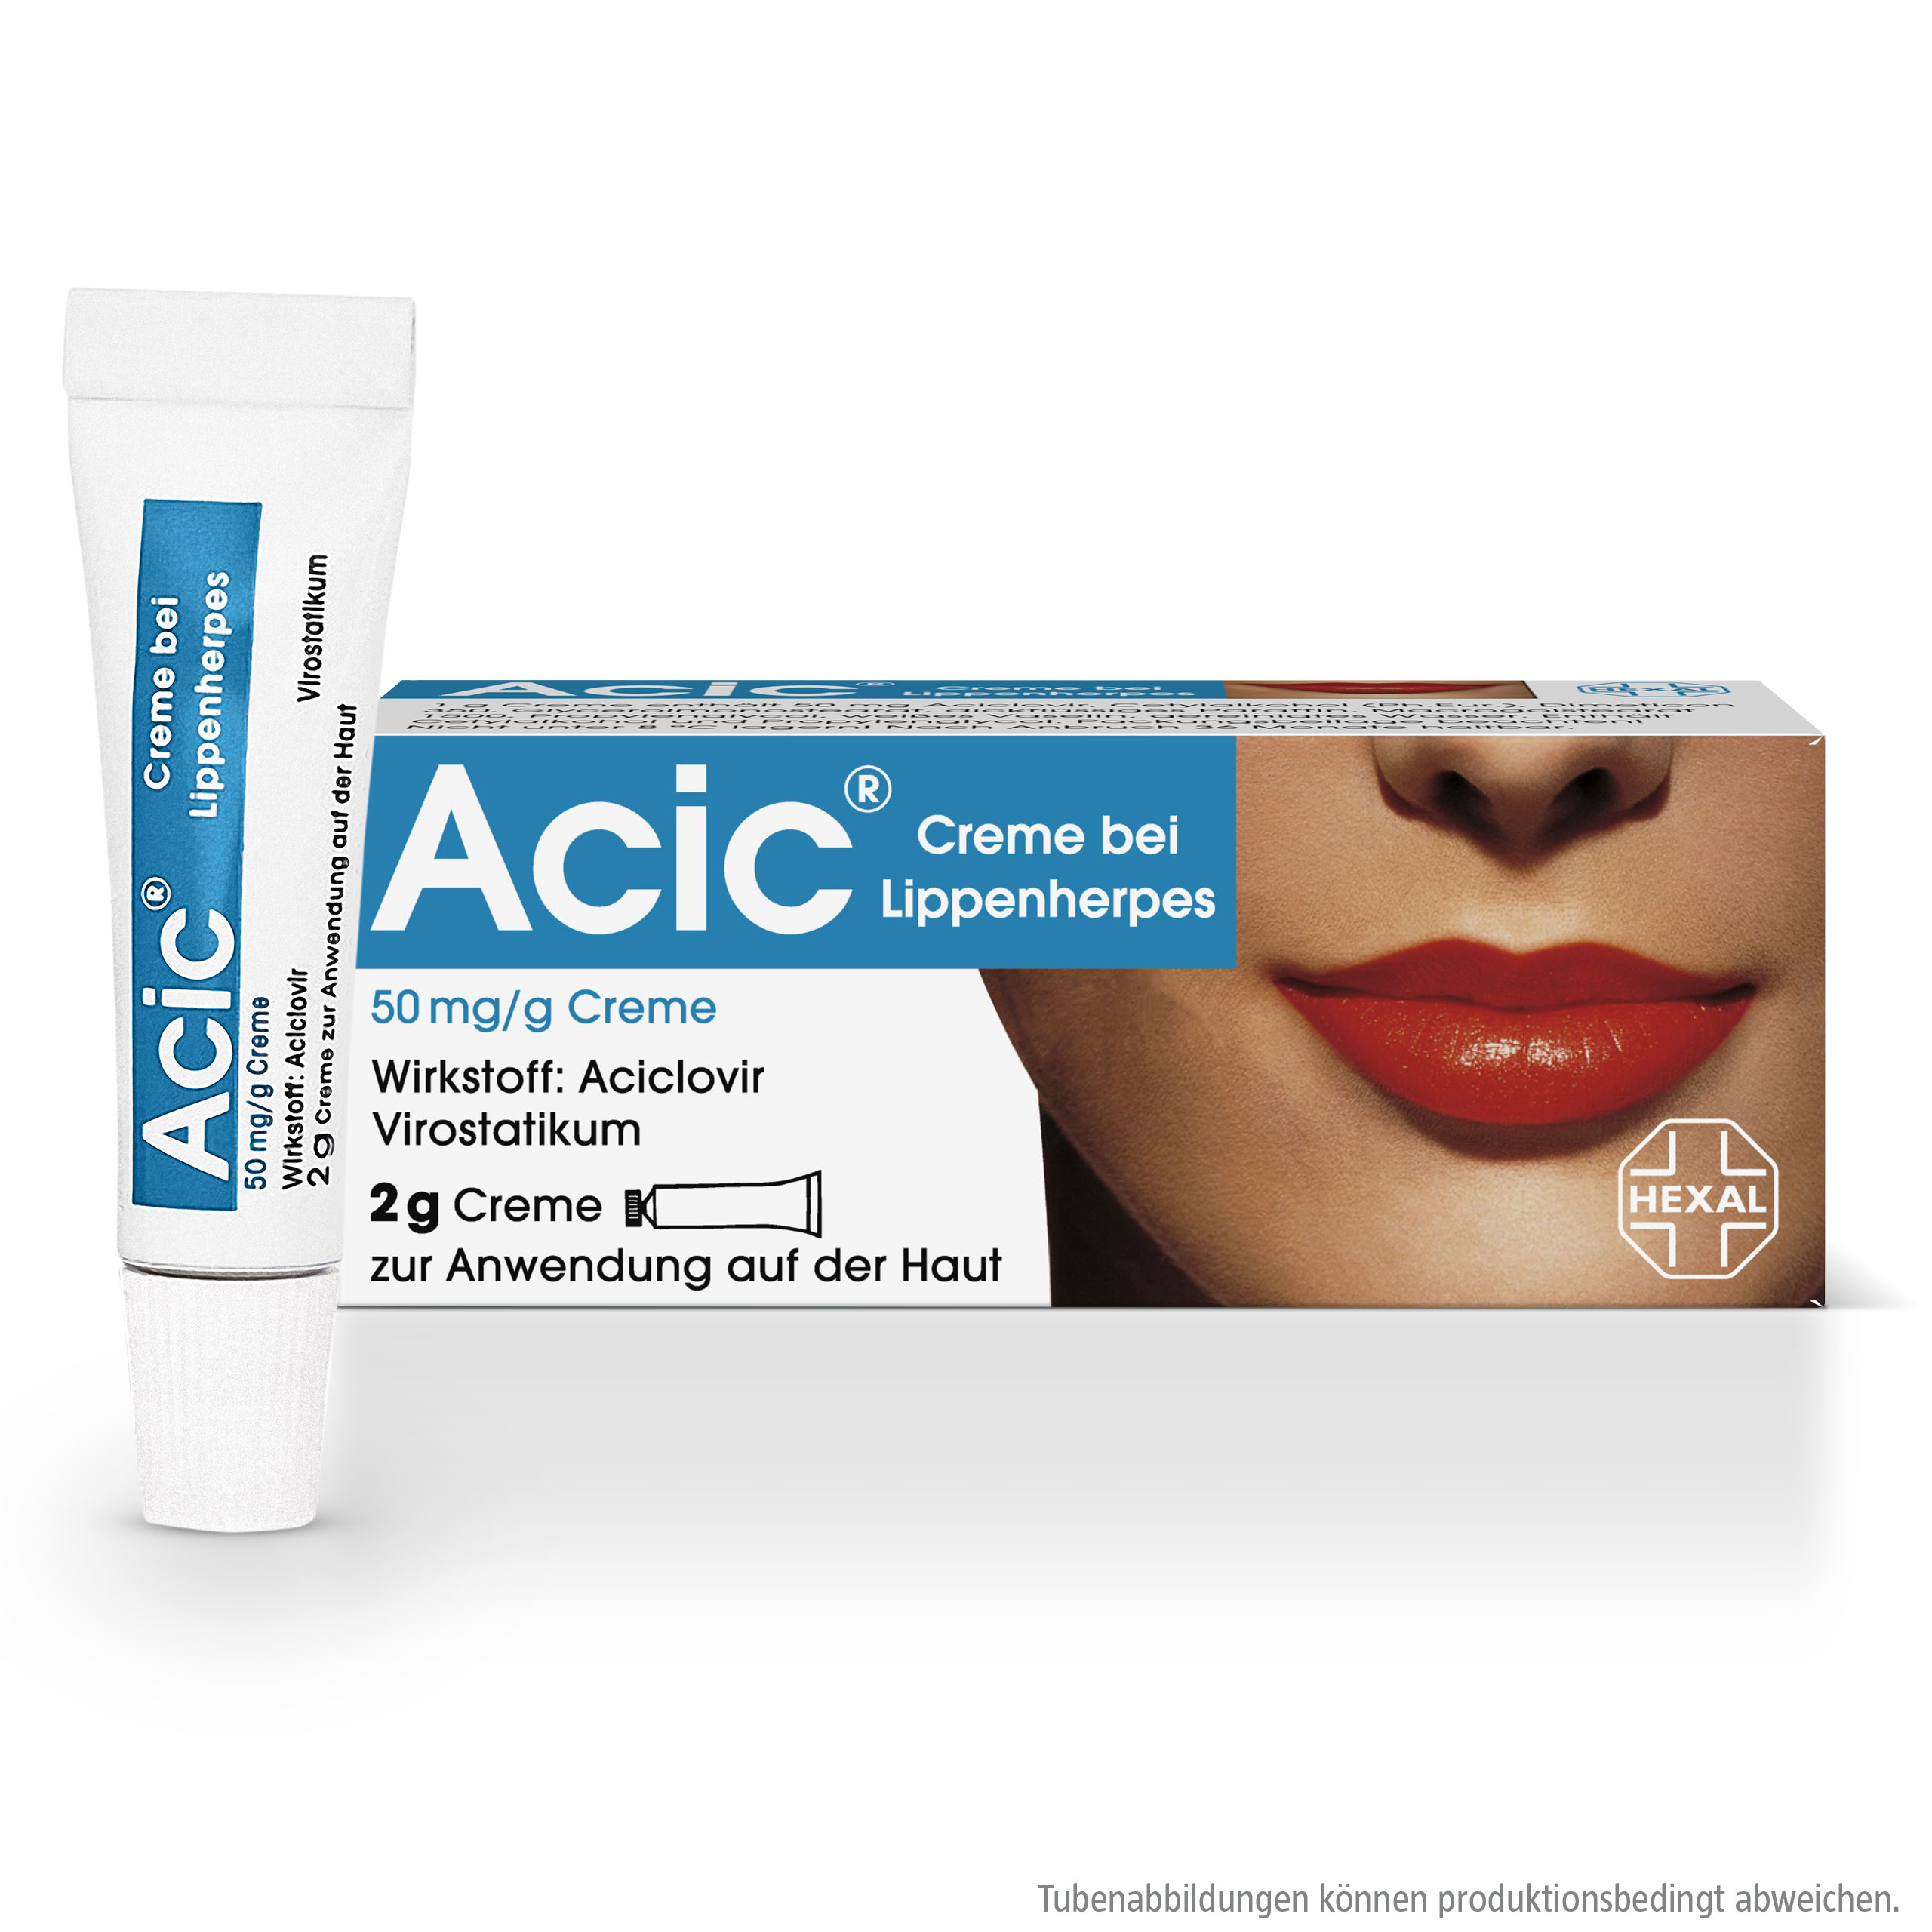 Acic bei Lippenherpes (2 g)